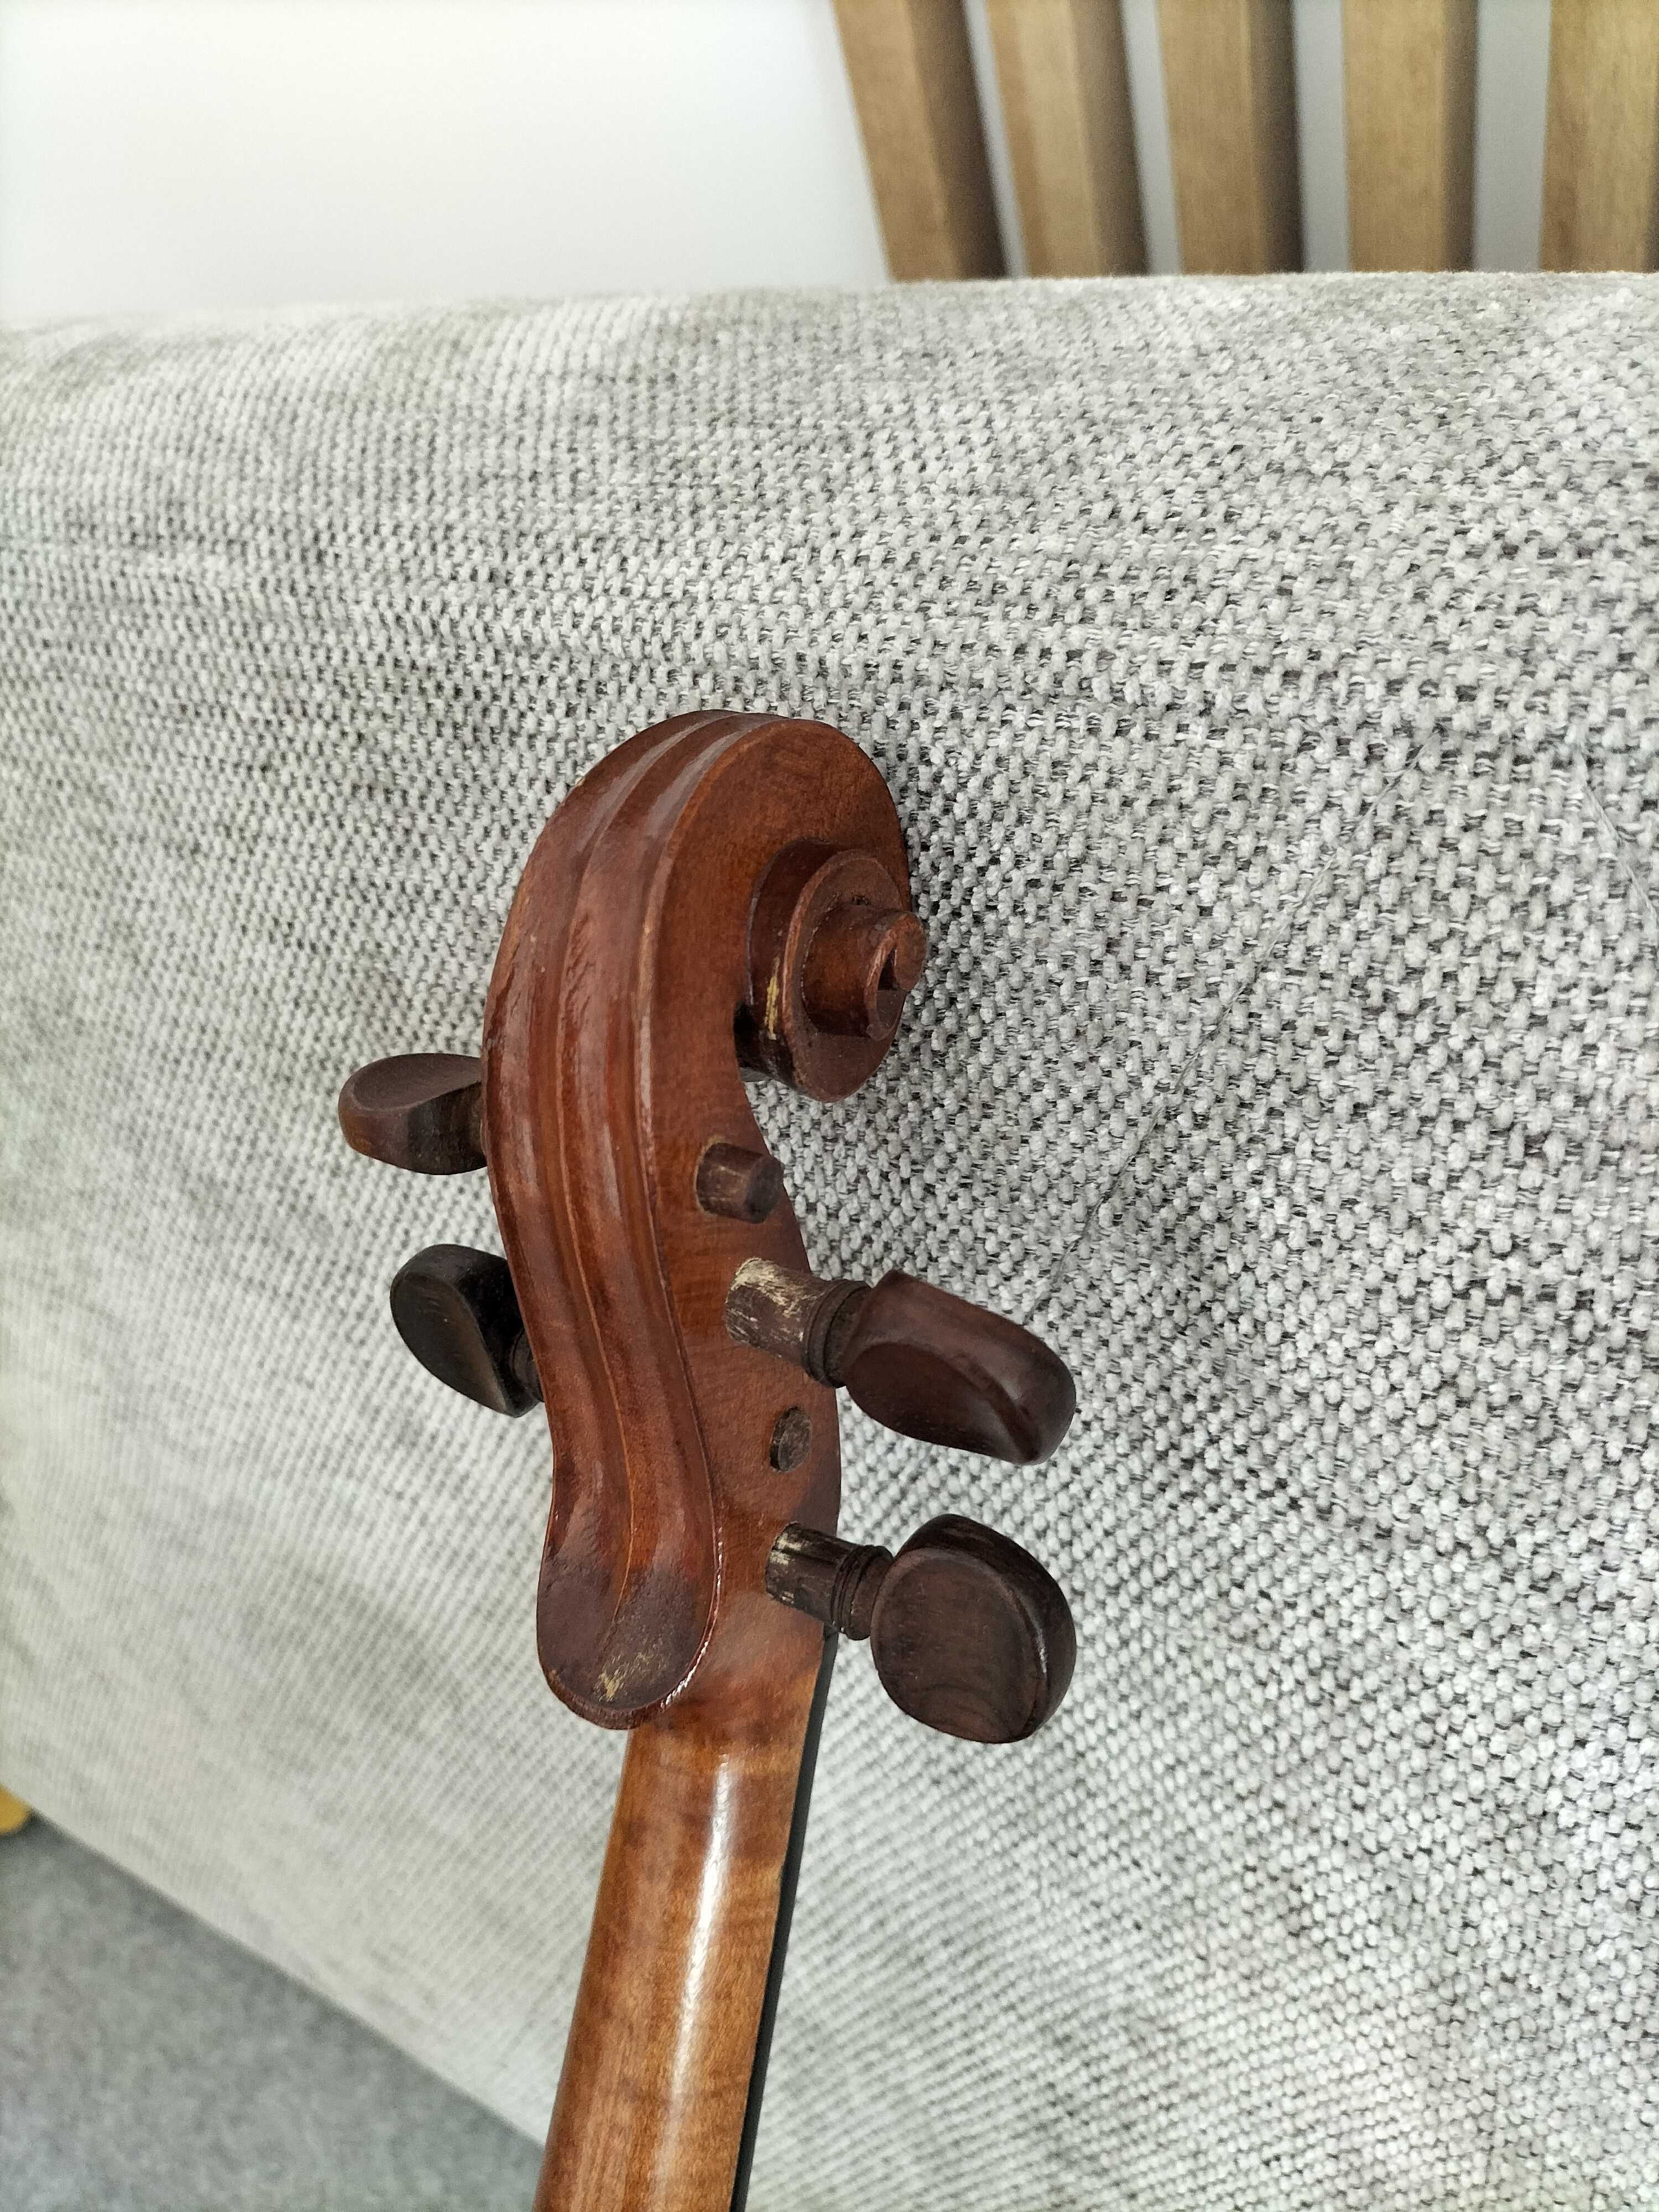 Skrzypce kopia Stradivariusa